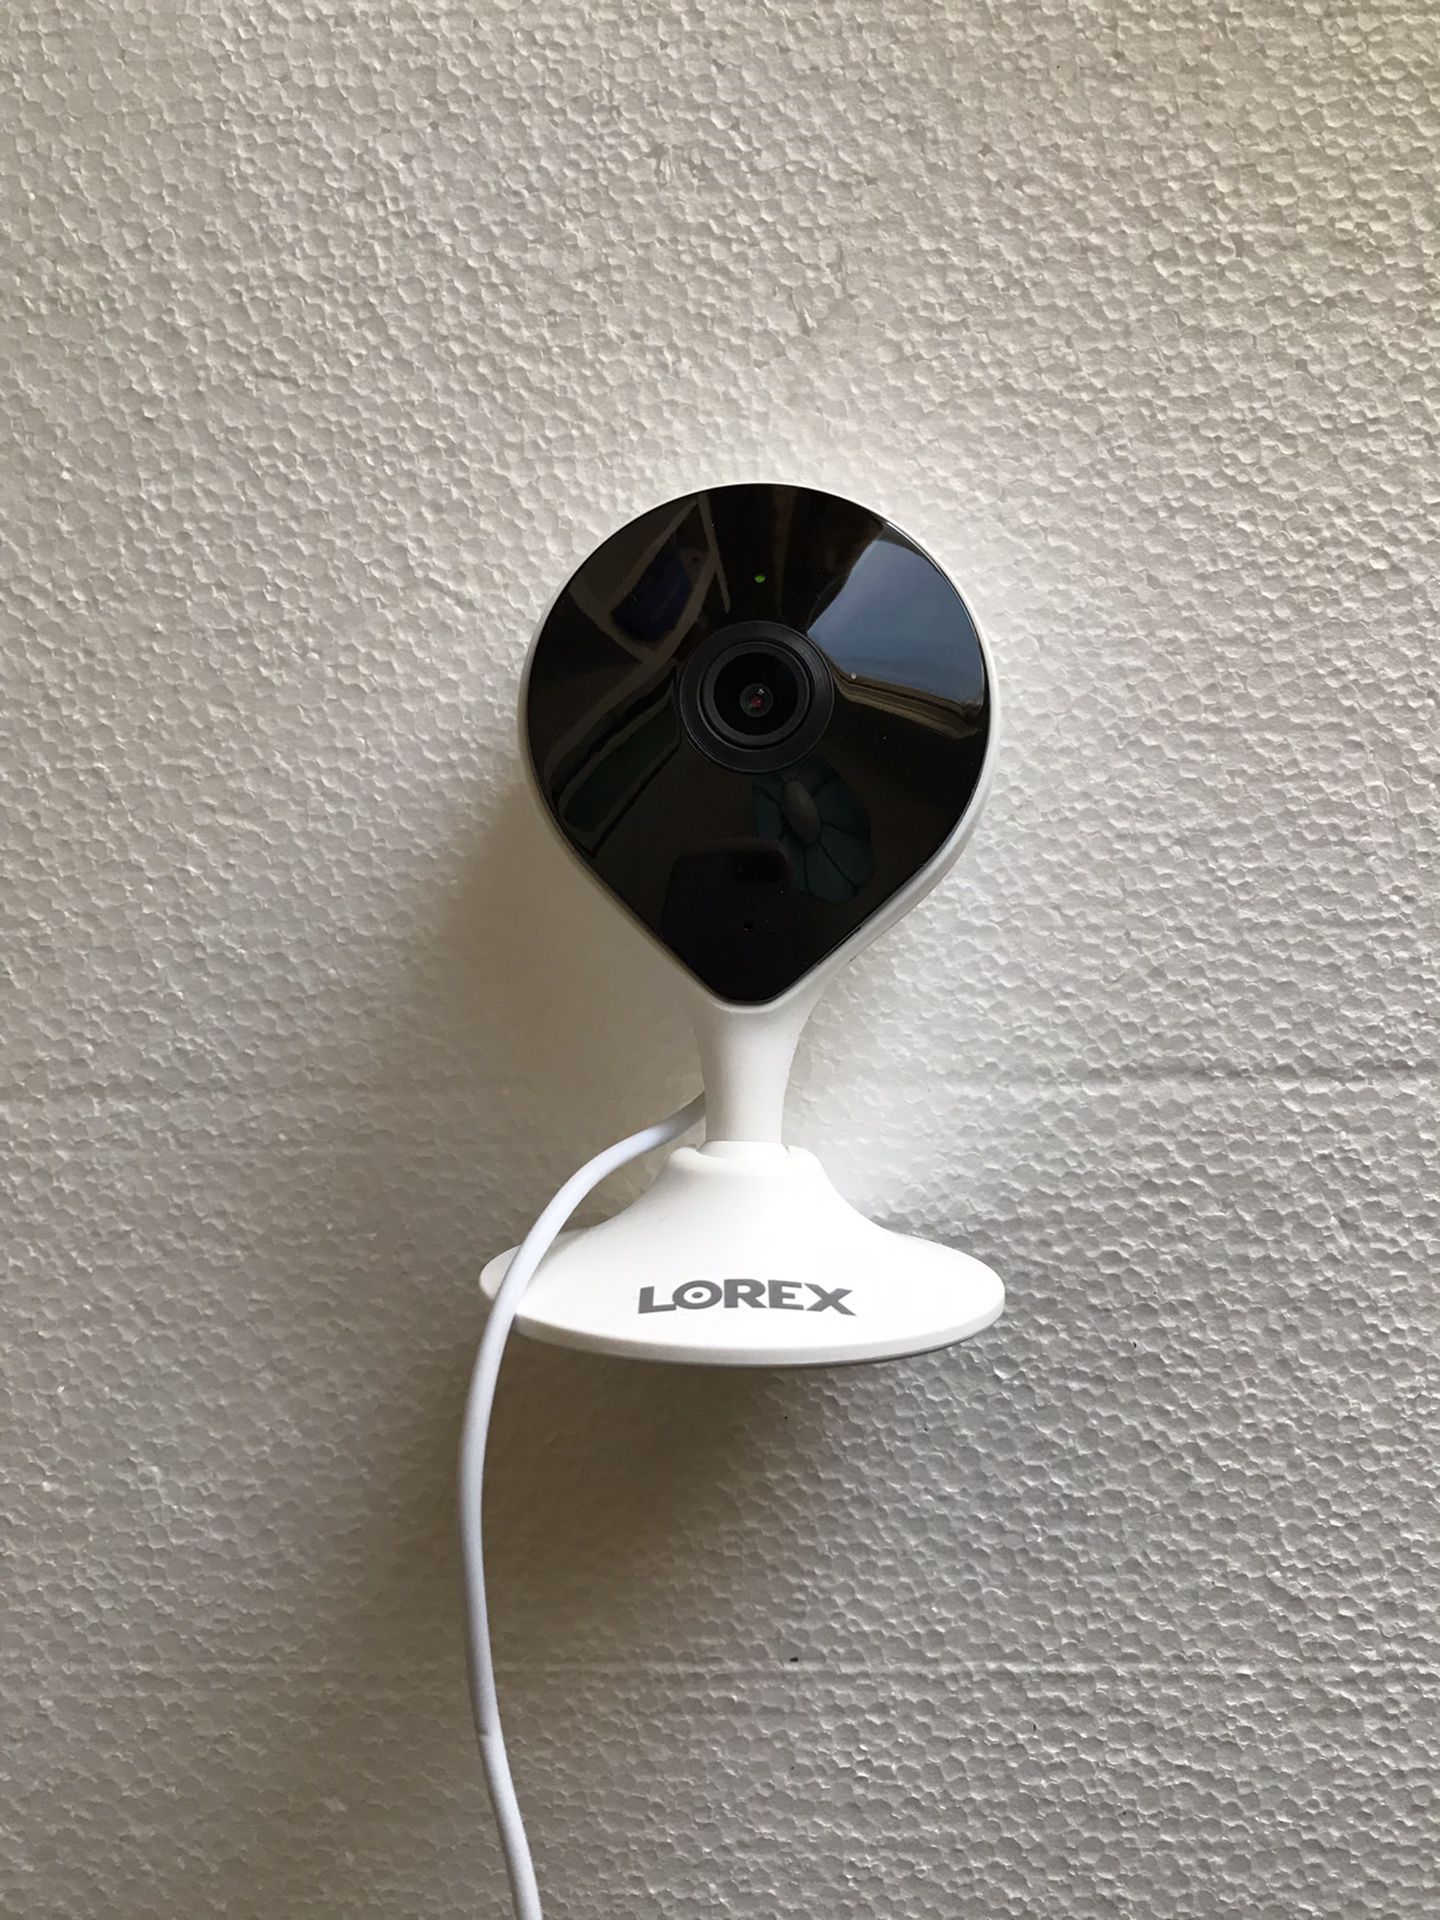 Lorex 1080p Full HD Smart Indoor Wi-Fi Security Camera